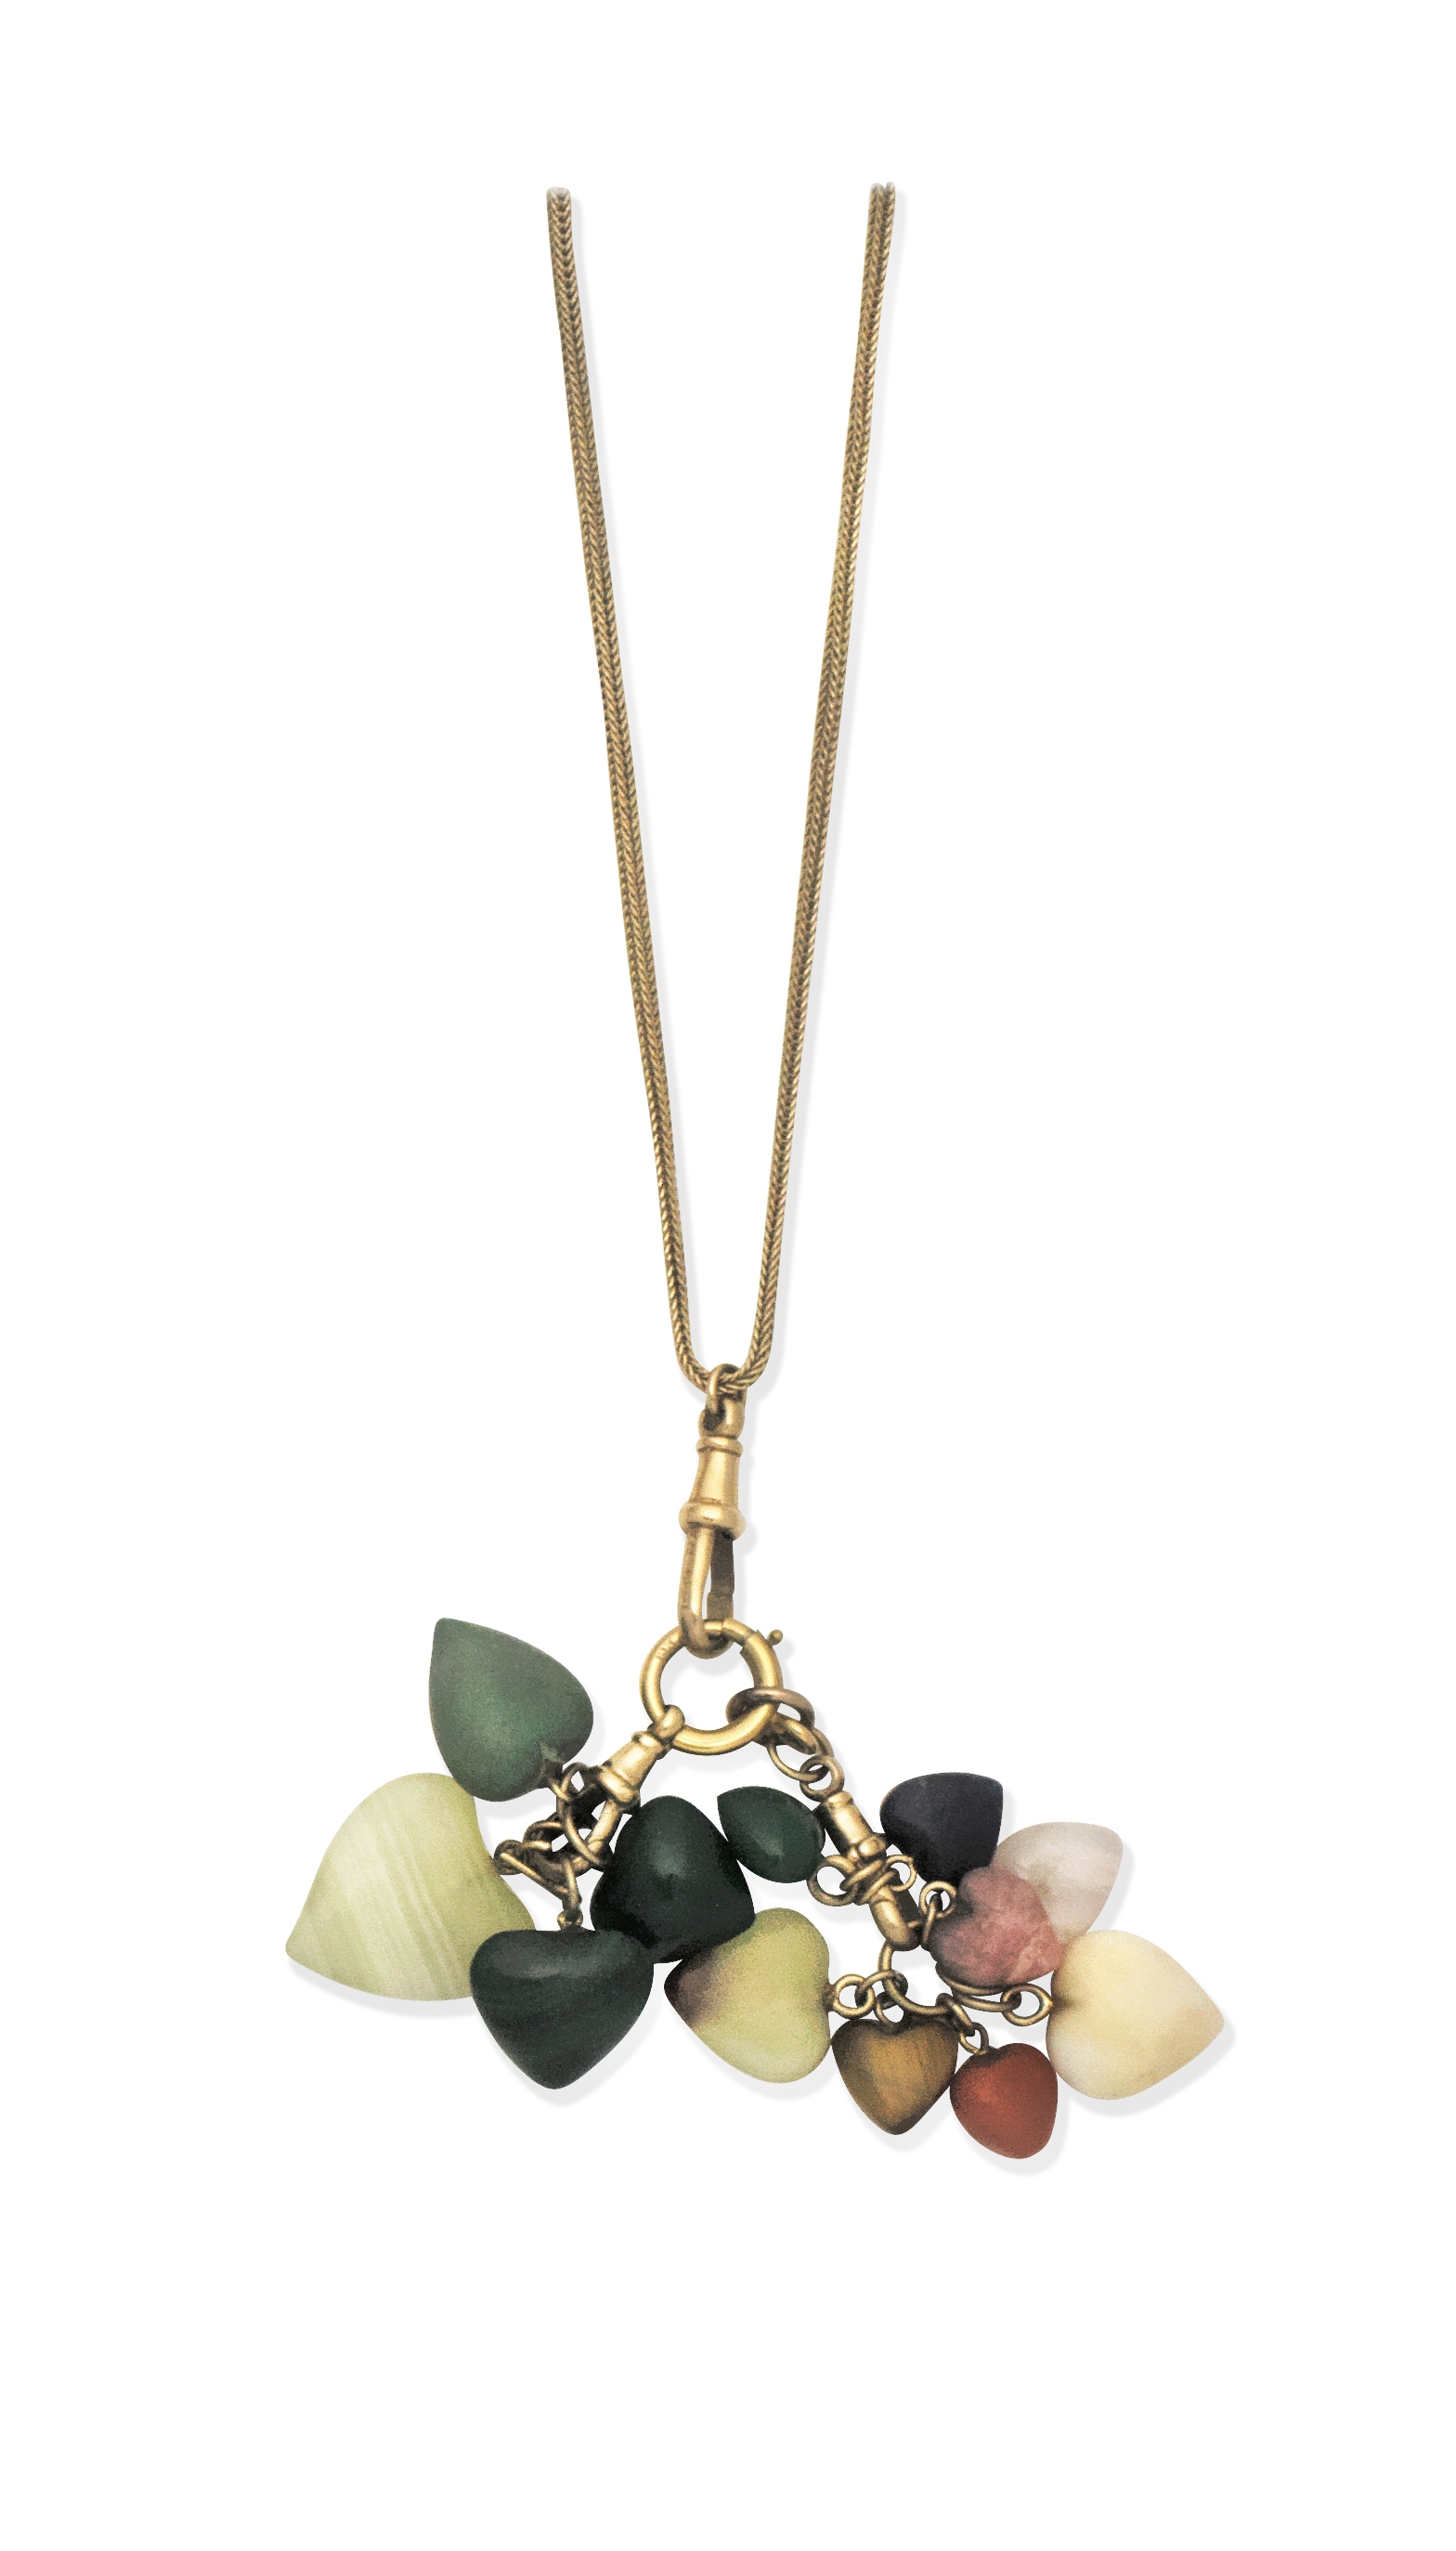 Gem-set pendant and necklace